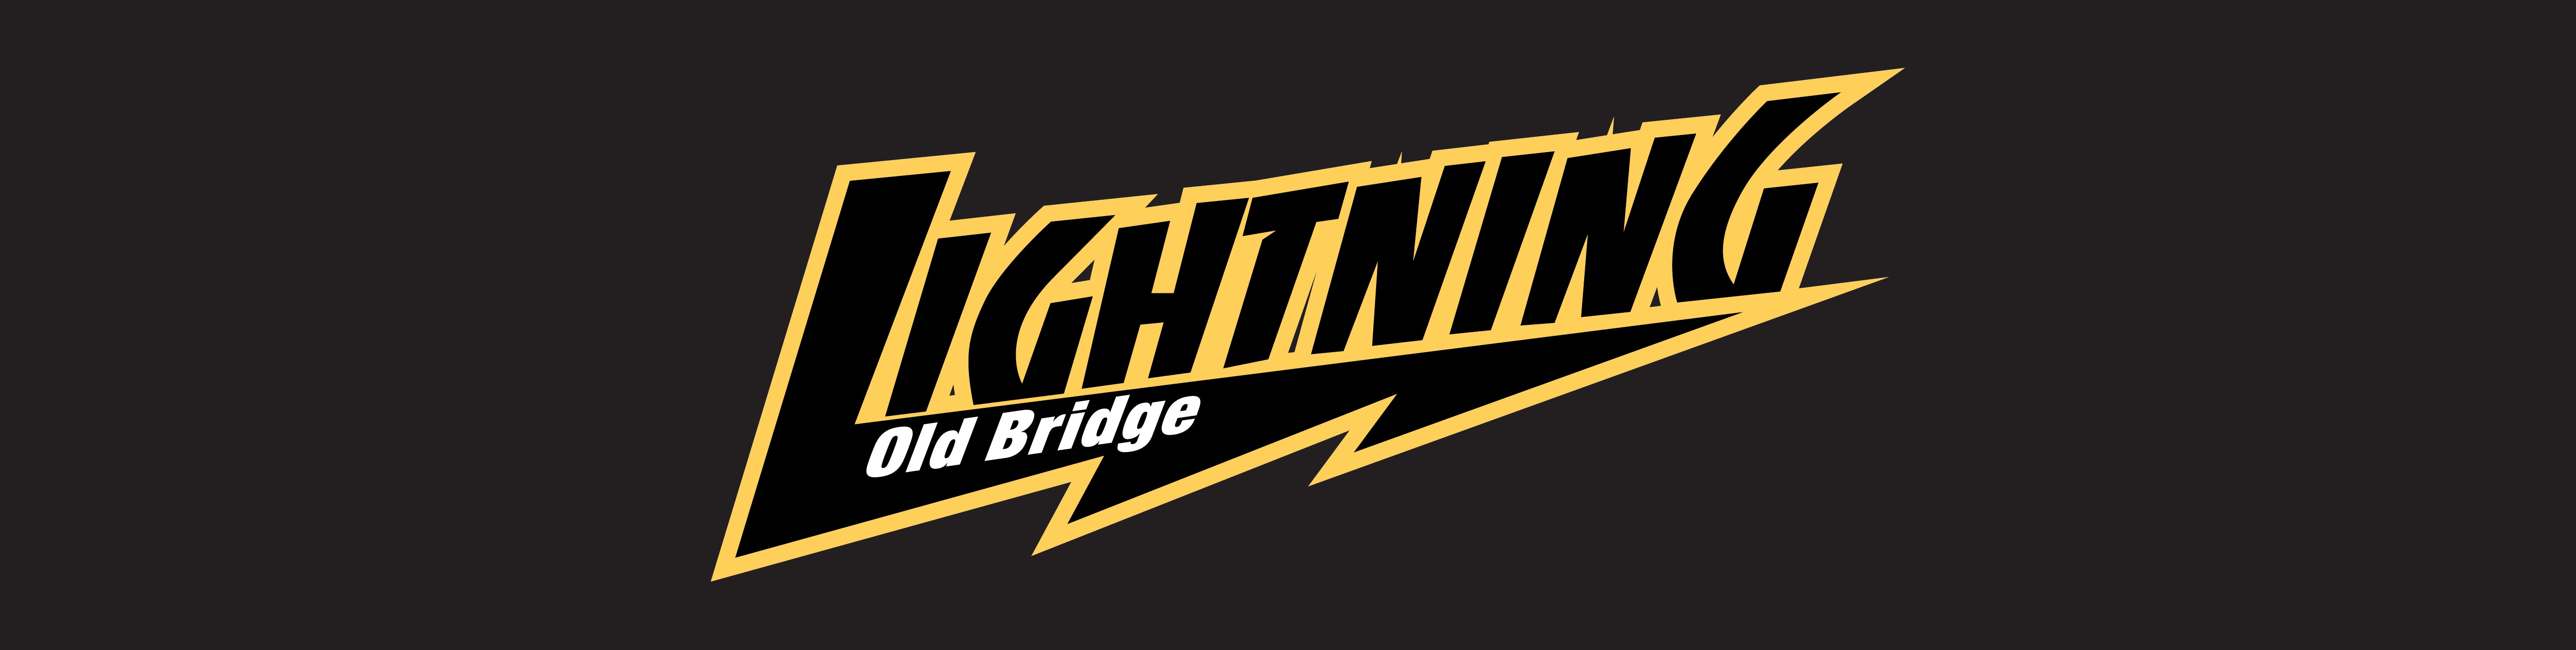 Old Bridge Lightning